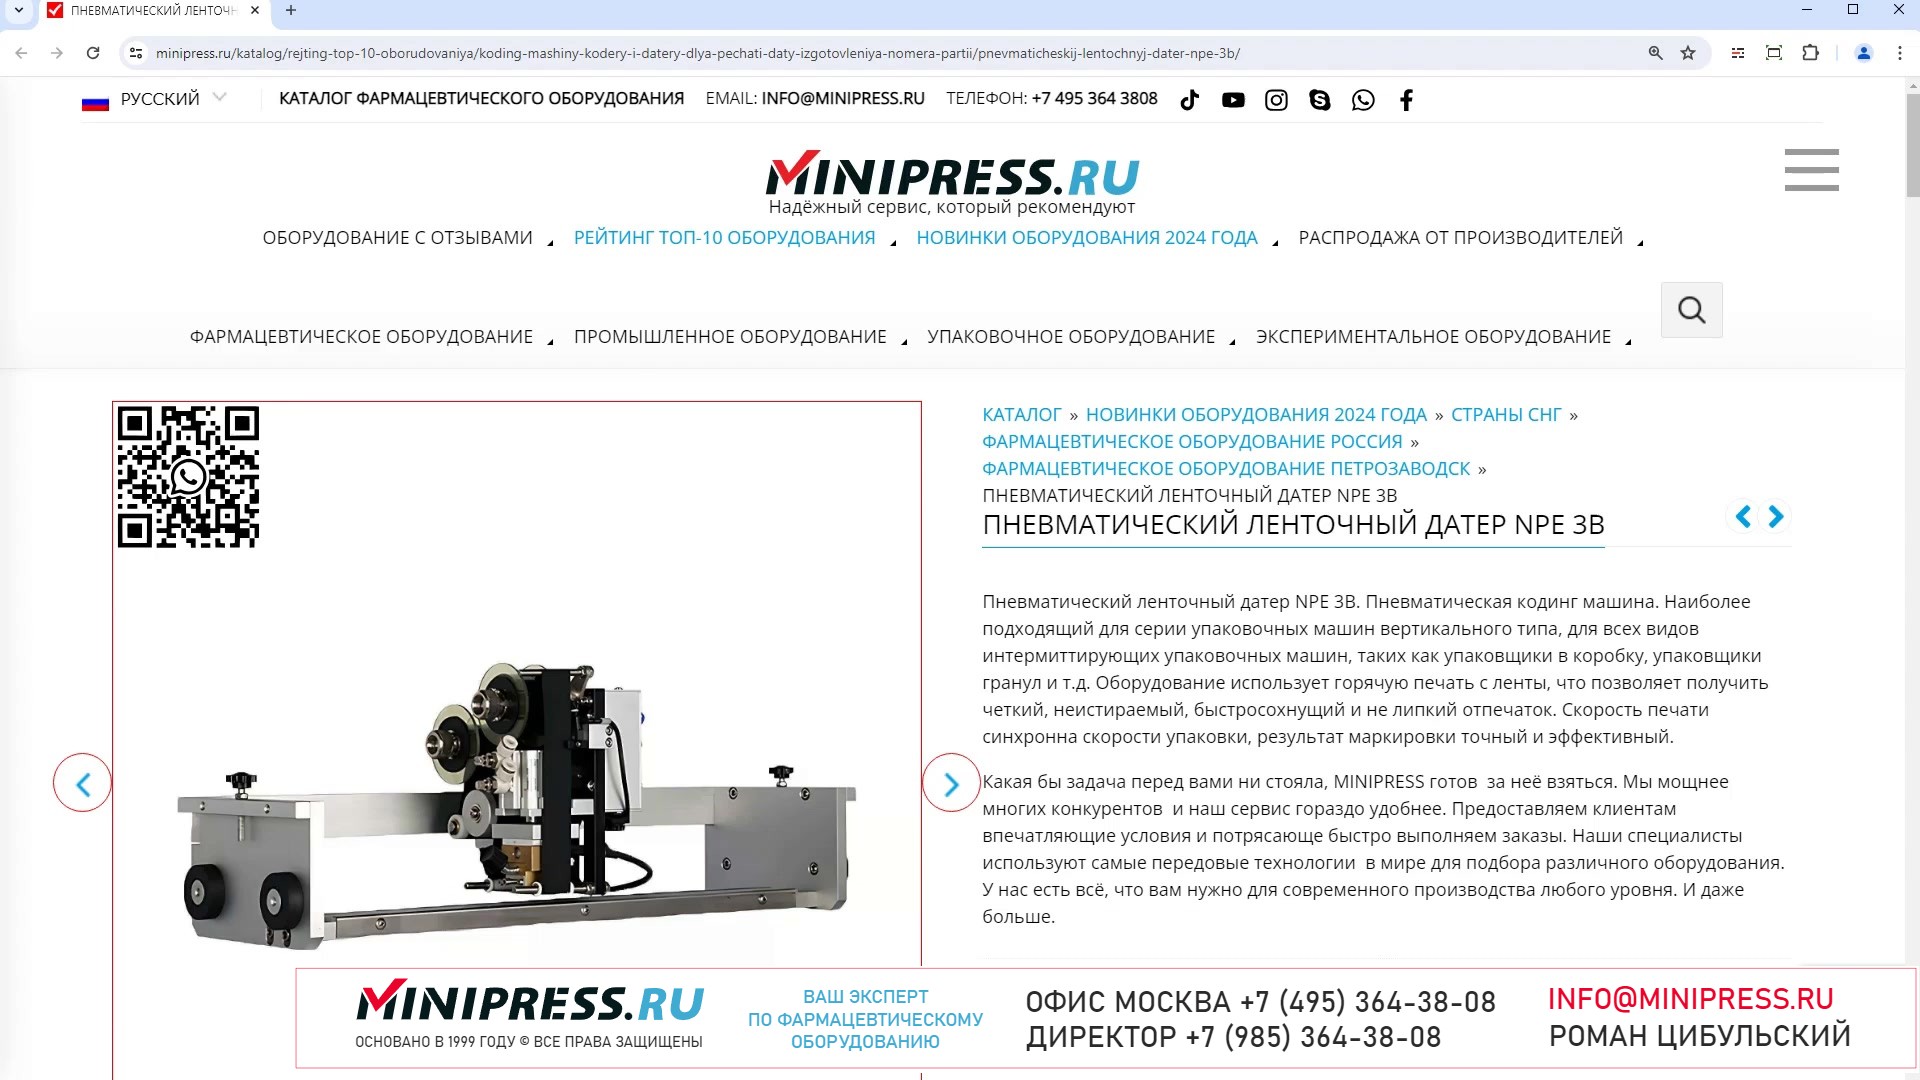 Minipress.ru Пневматический ленточный датер NPE 3B